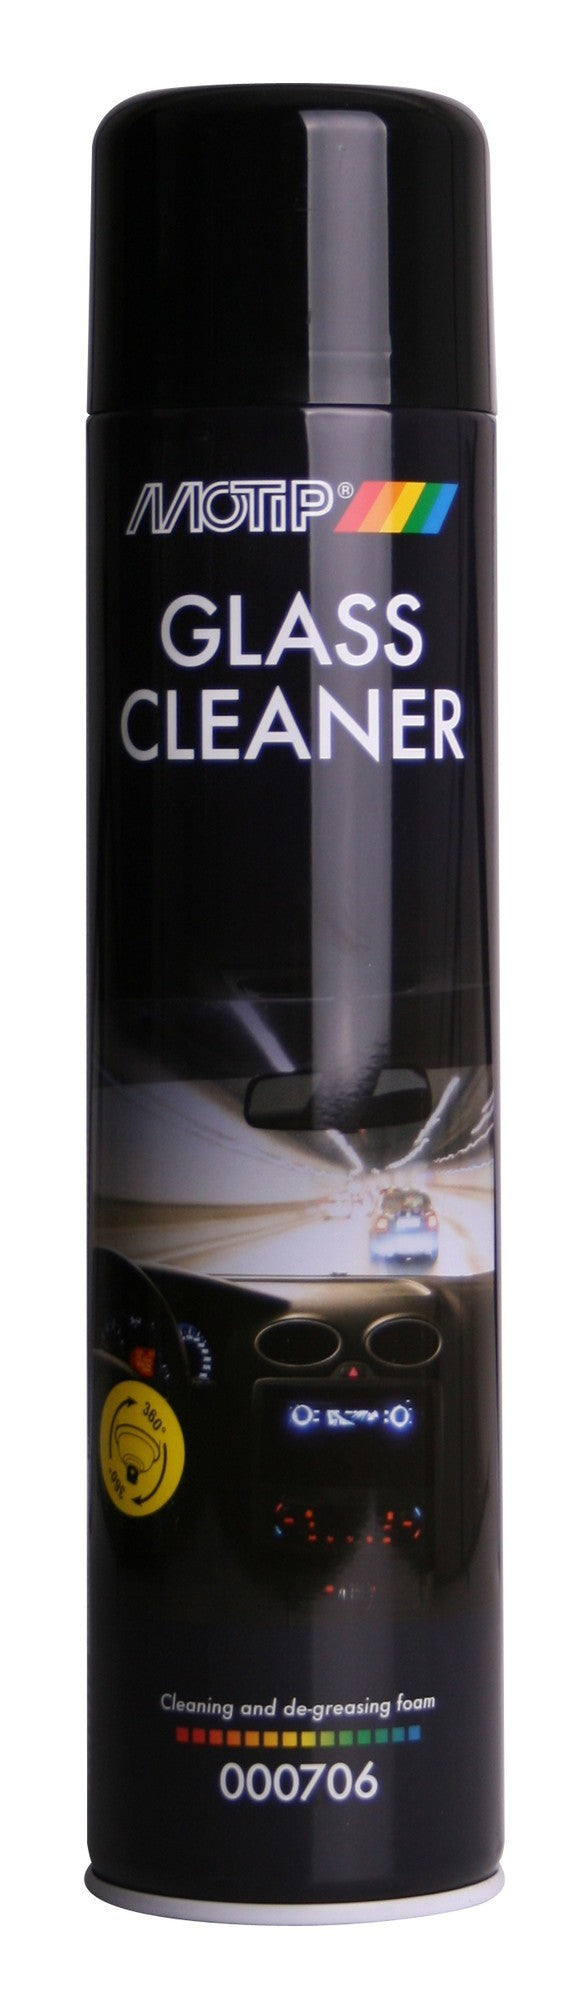 Motip Glass cleaner 000706